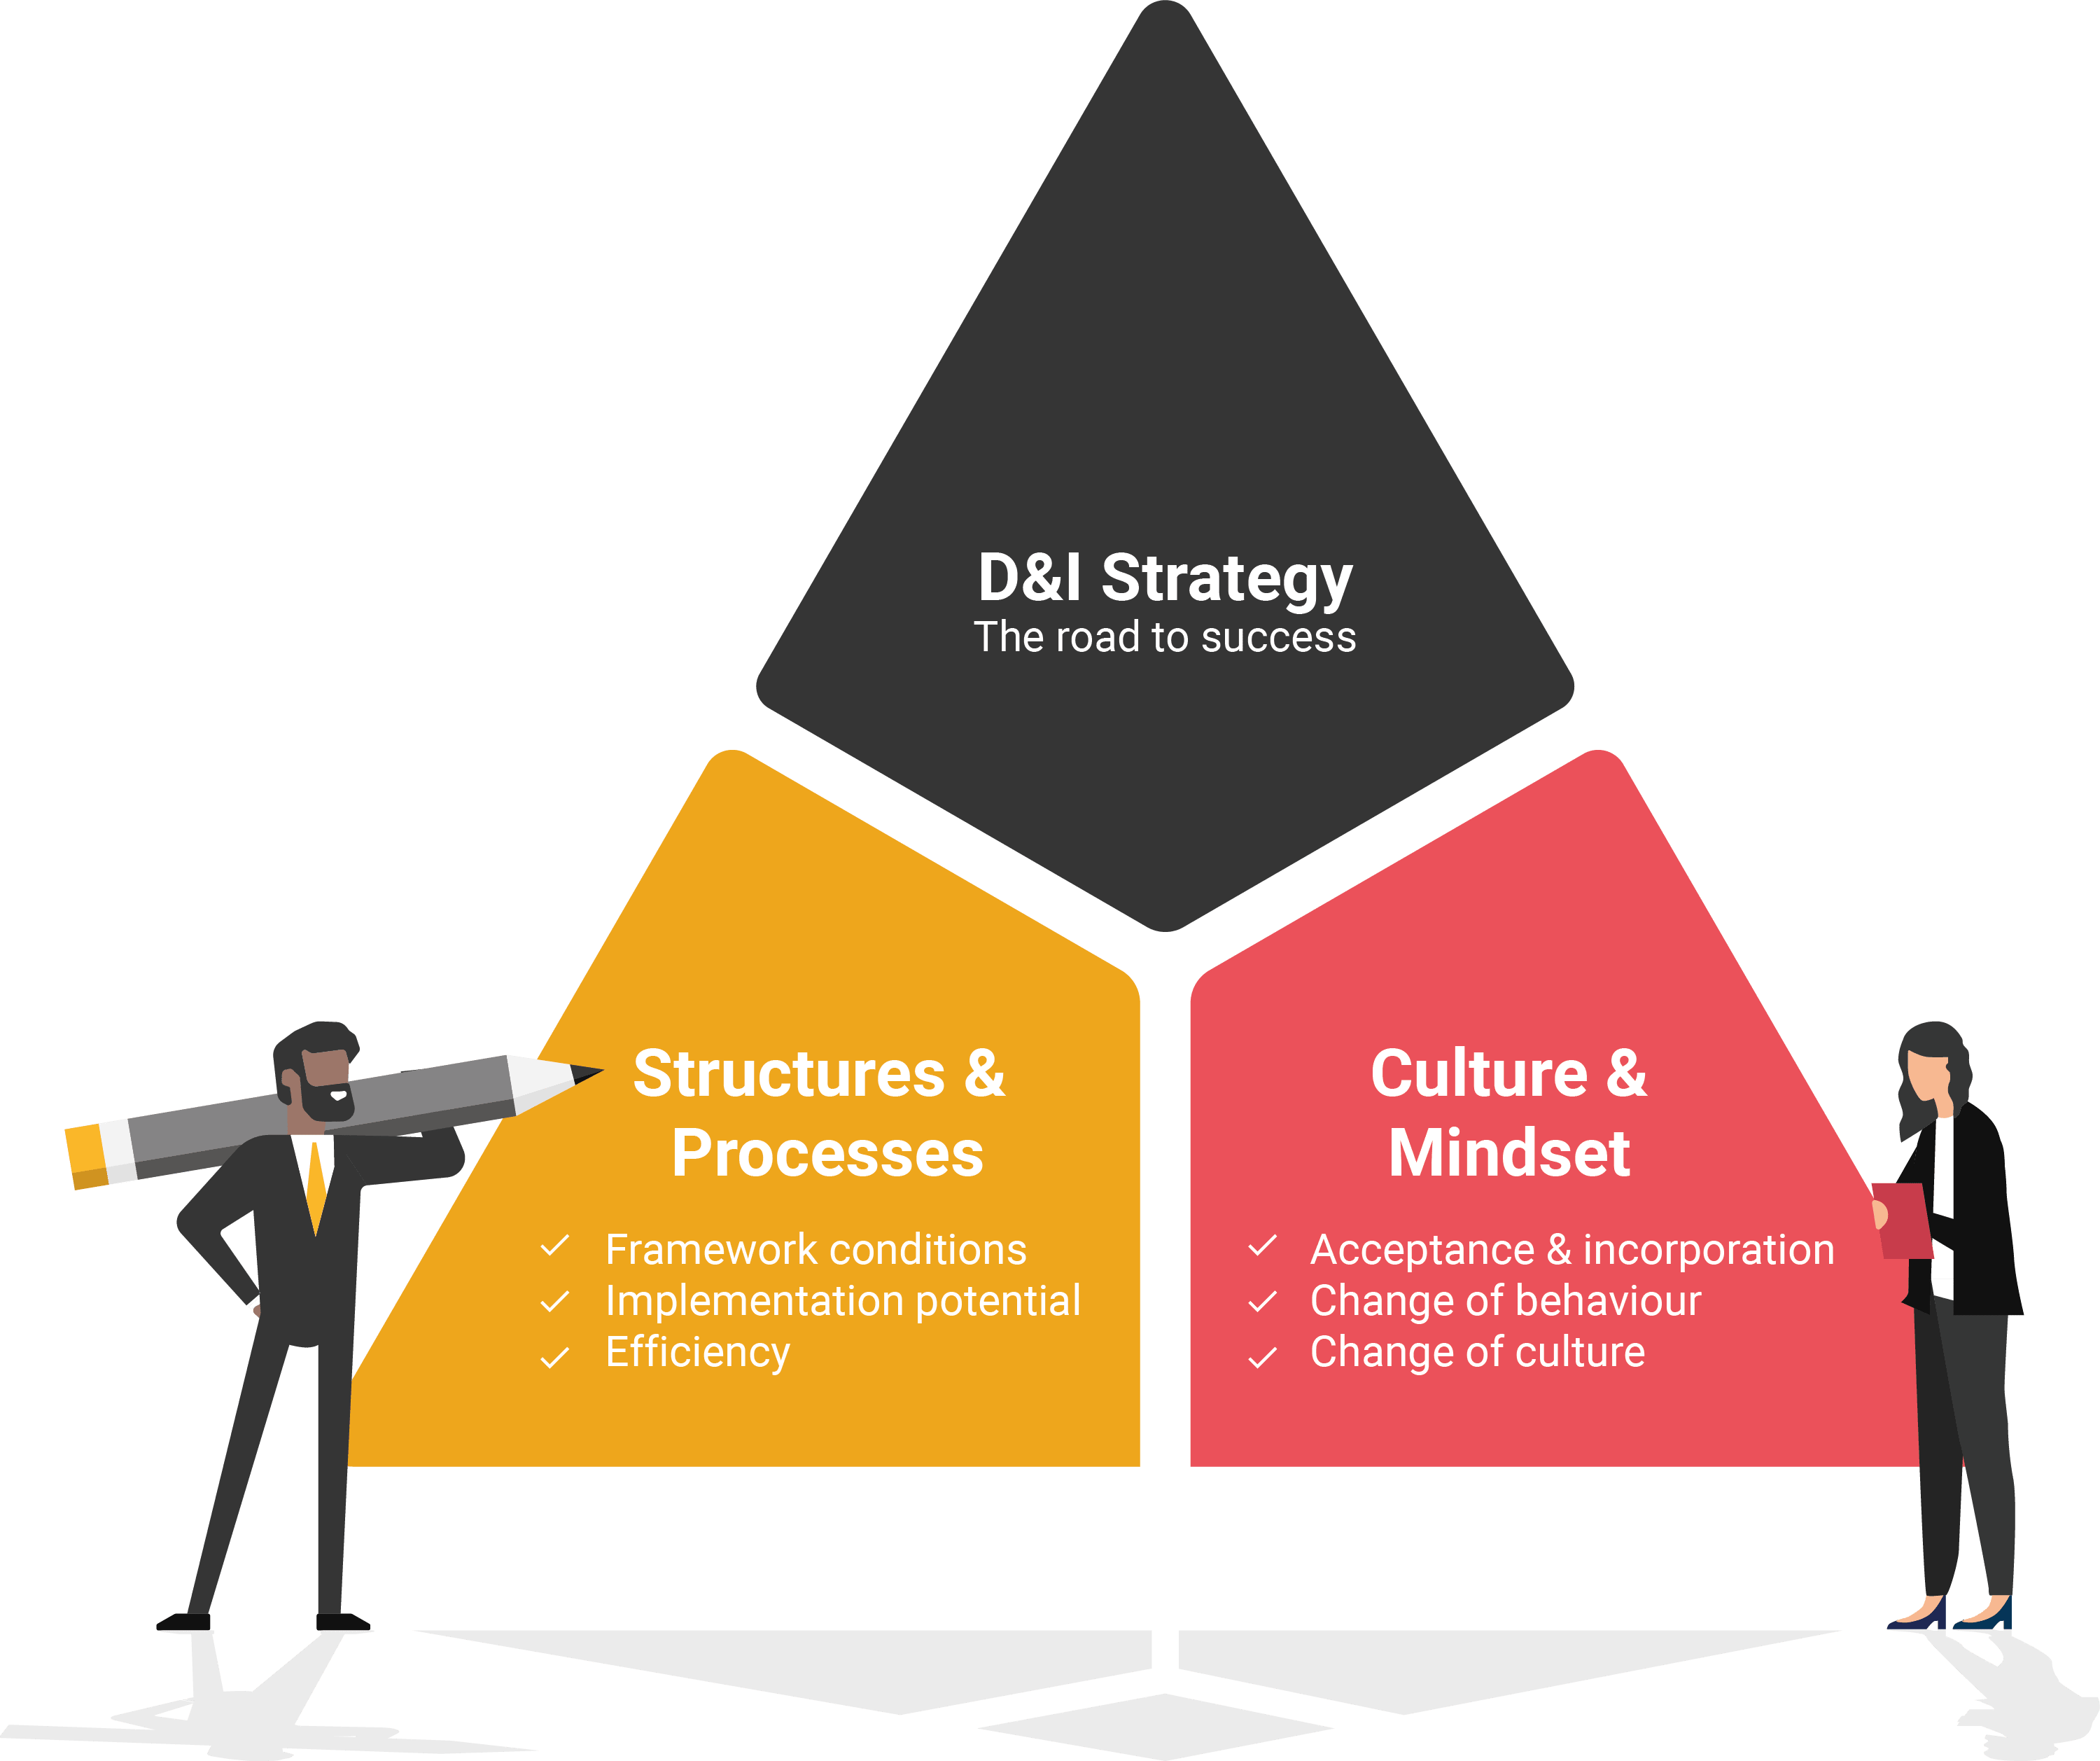 D&I Strategy, Structures & Processes, Culture & Mindset